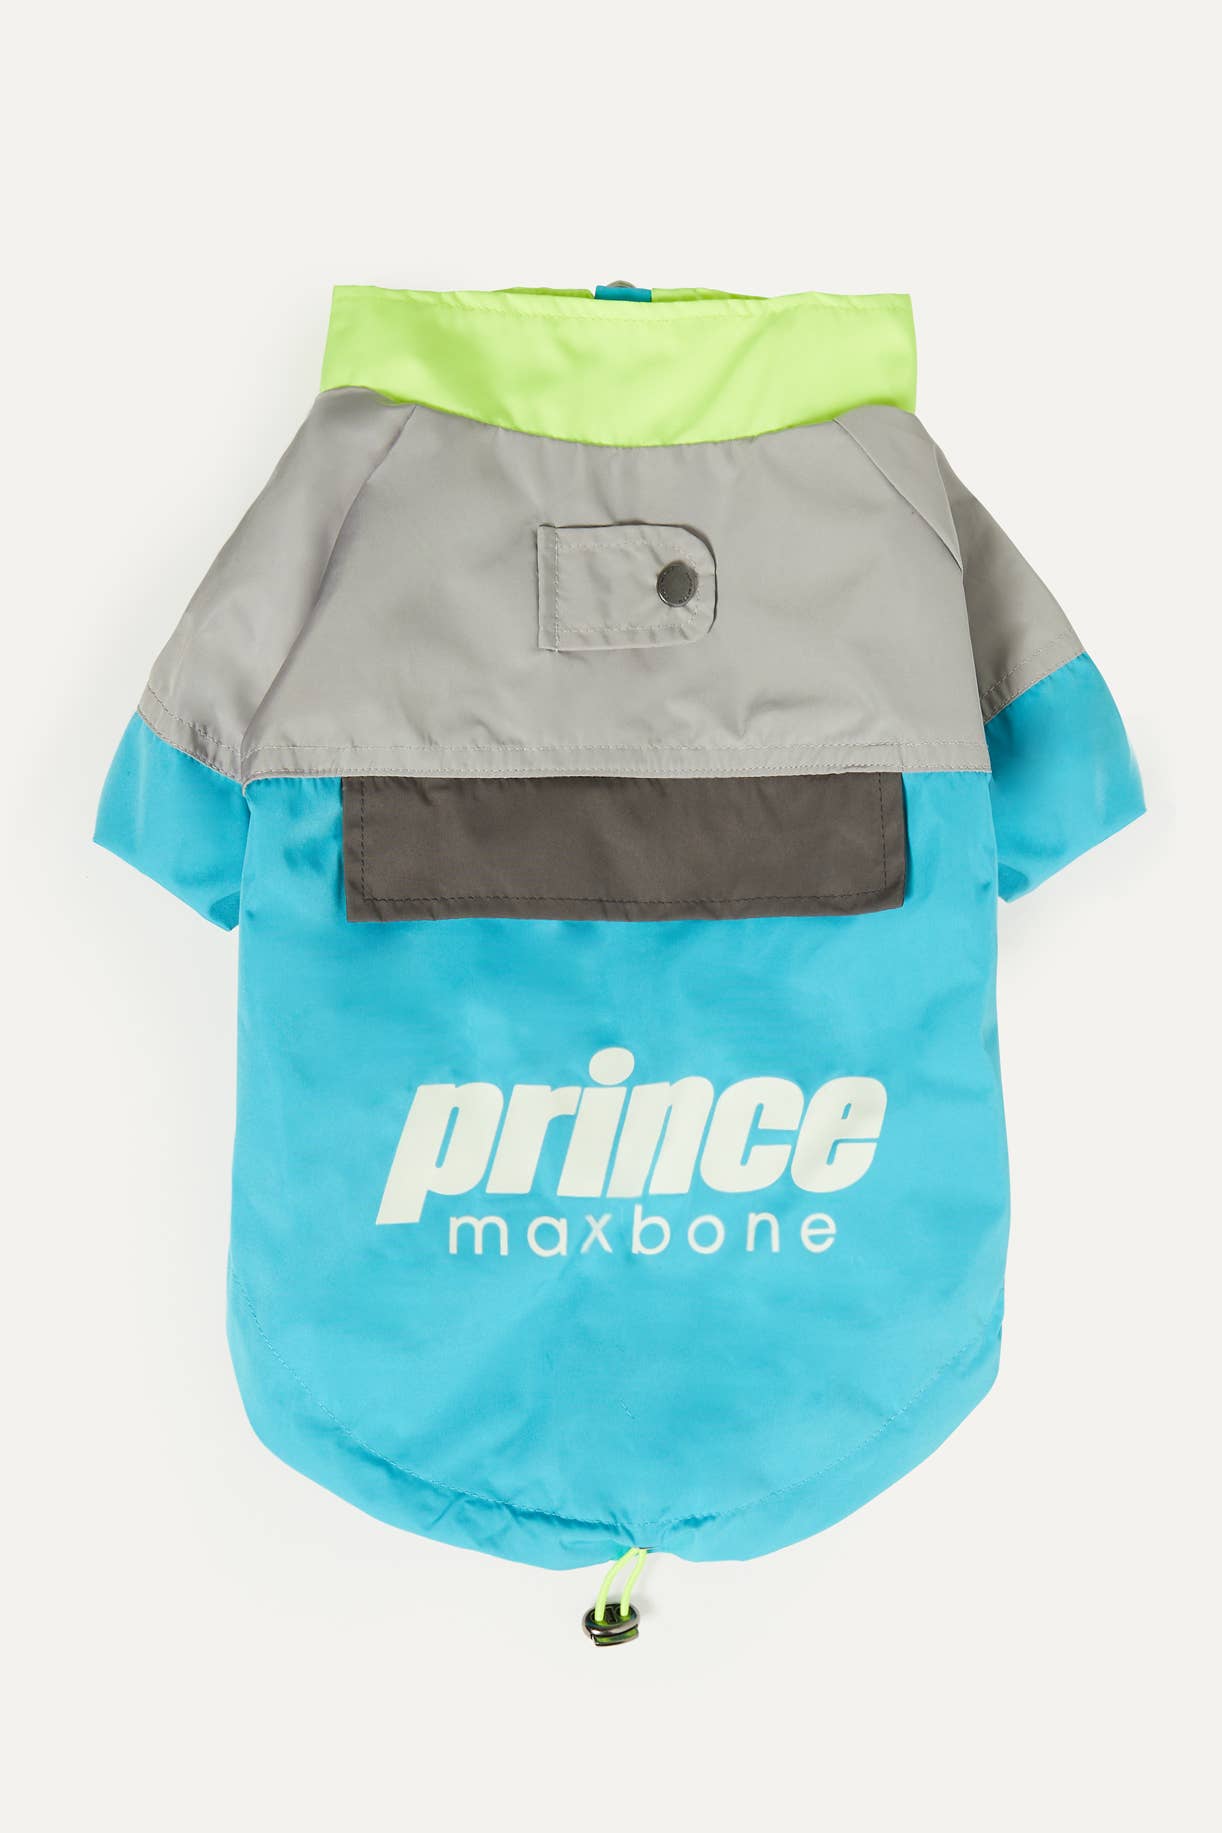 maxbone - Maxbone X Prince Glowing Wind Breaker for Dogs